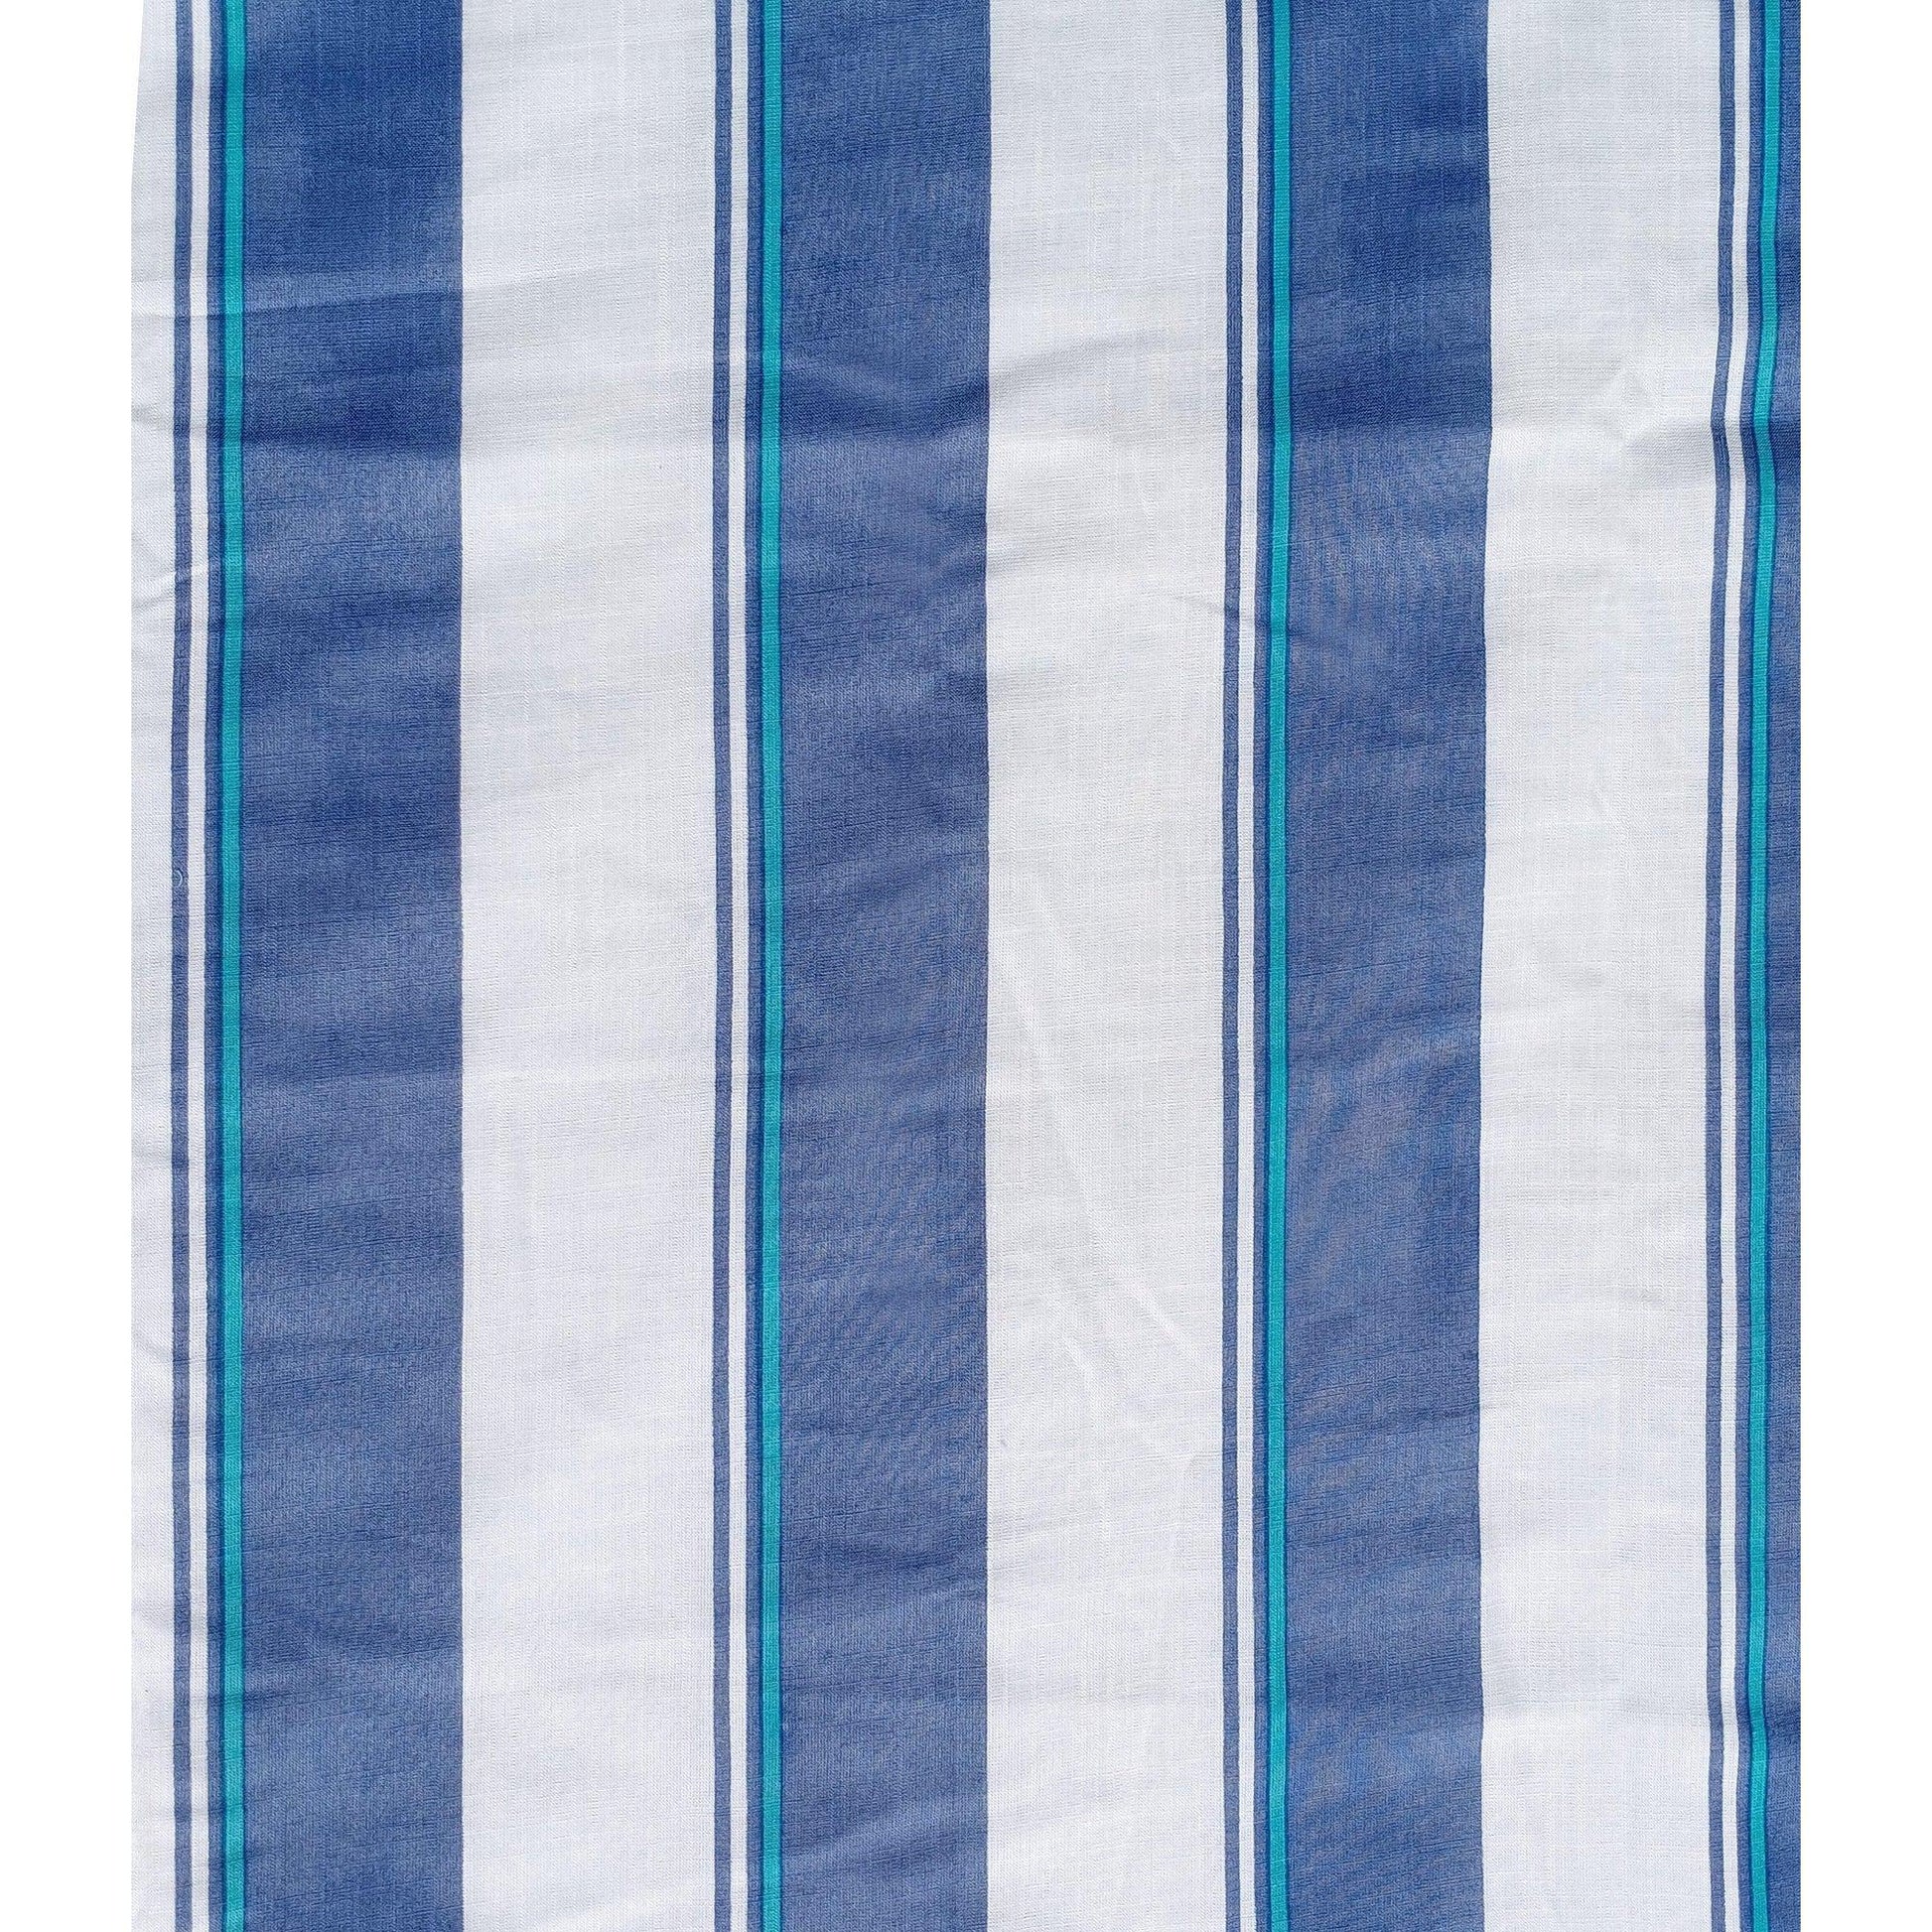 Blue Stripes Rayon slub Curtain Pair 7ft Door - The Teal Thread